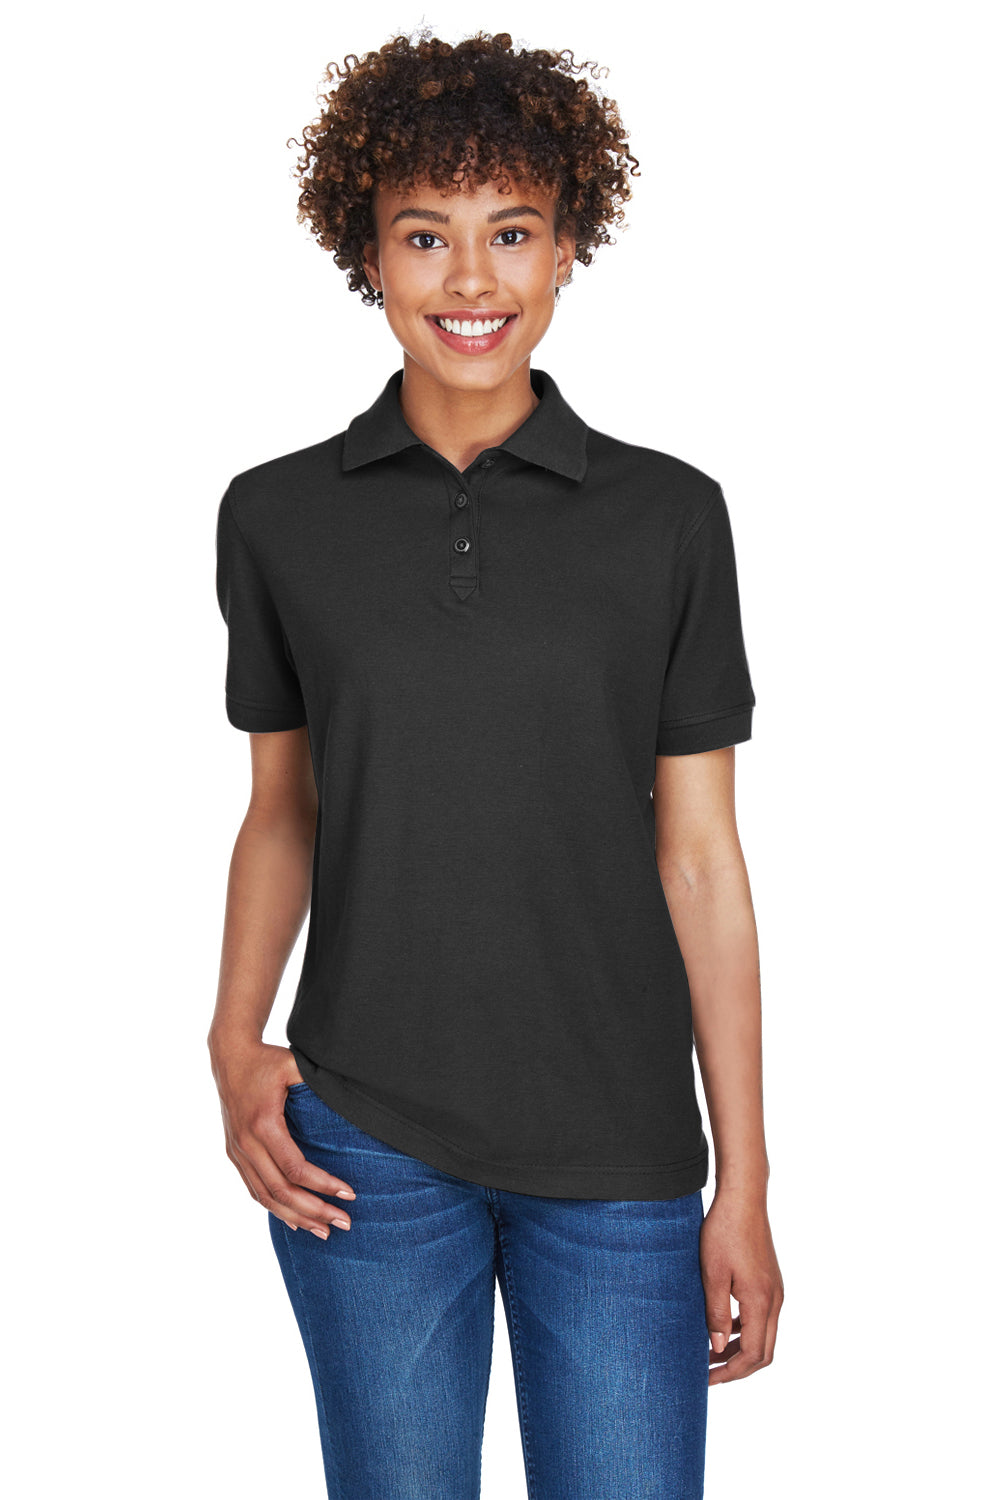 UltraClub 8541 Womens Whisper Short Sleeve Polo Shirt Black Front